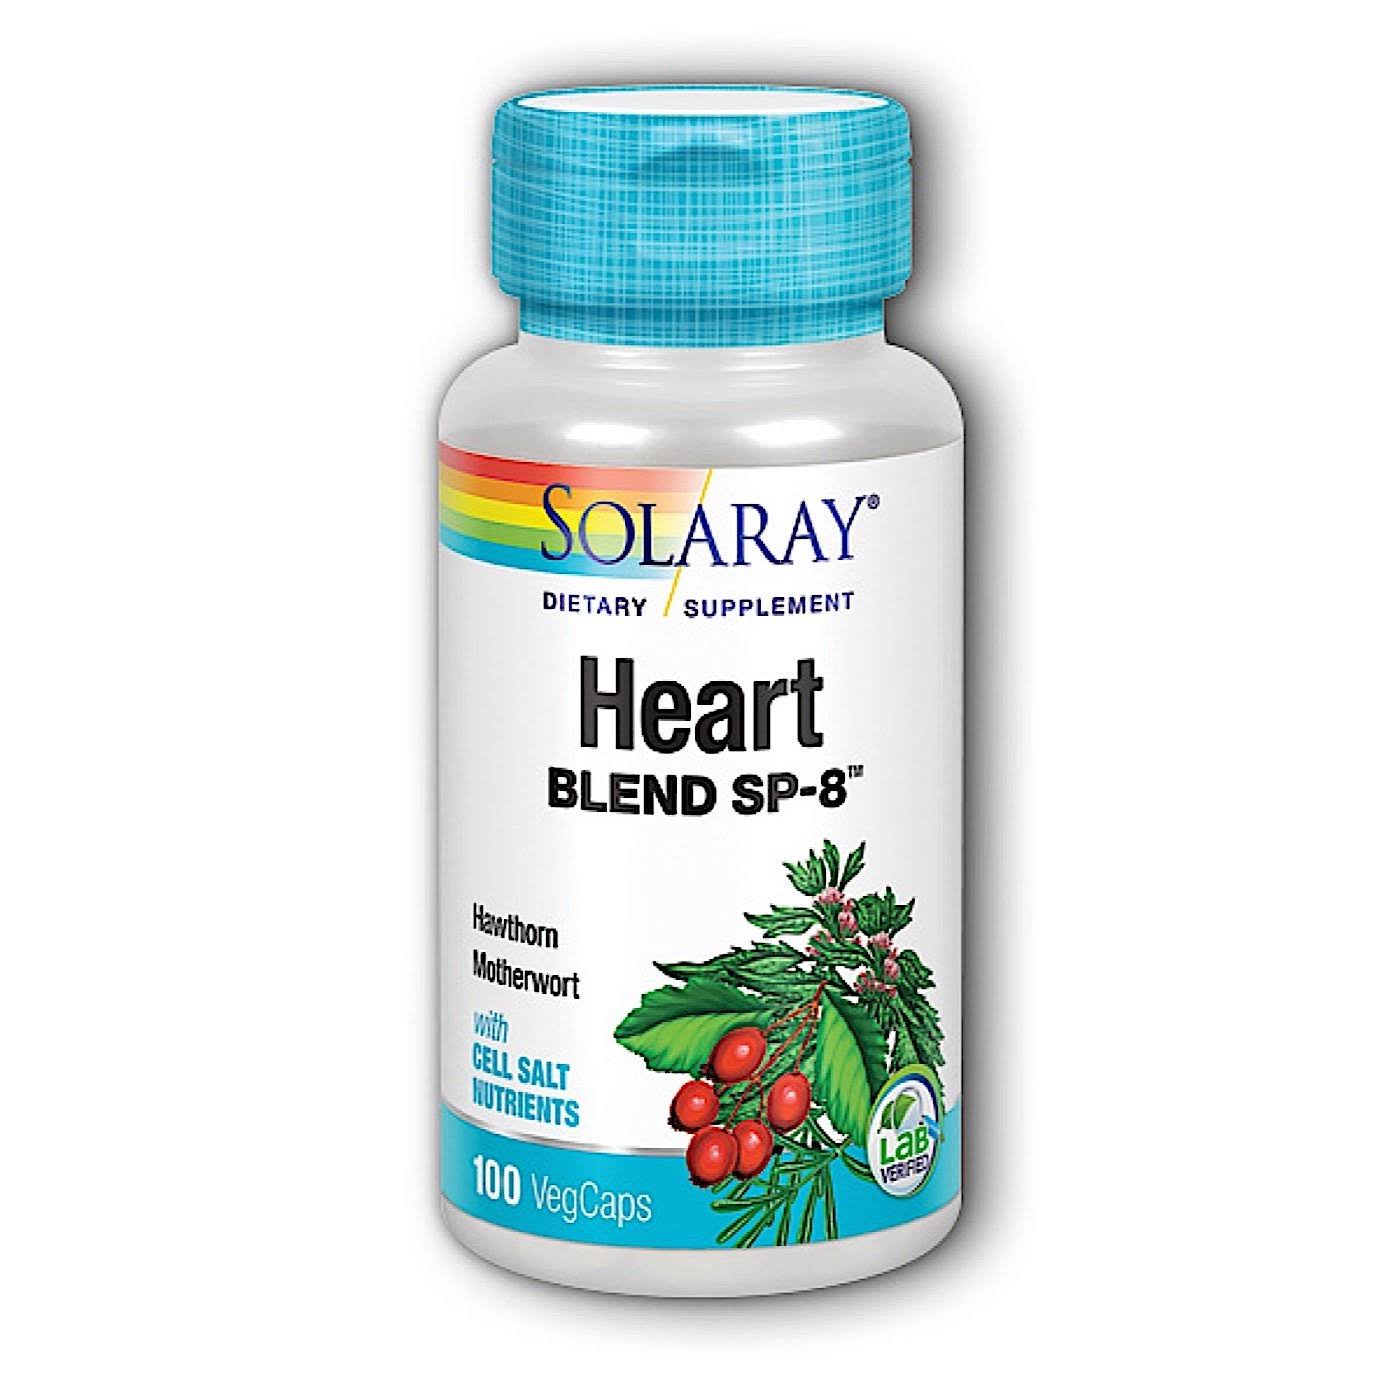 Solaray Heart Blend SP-8 Capsules - 100ct